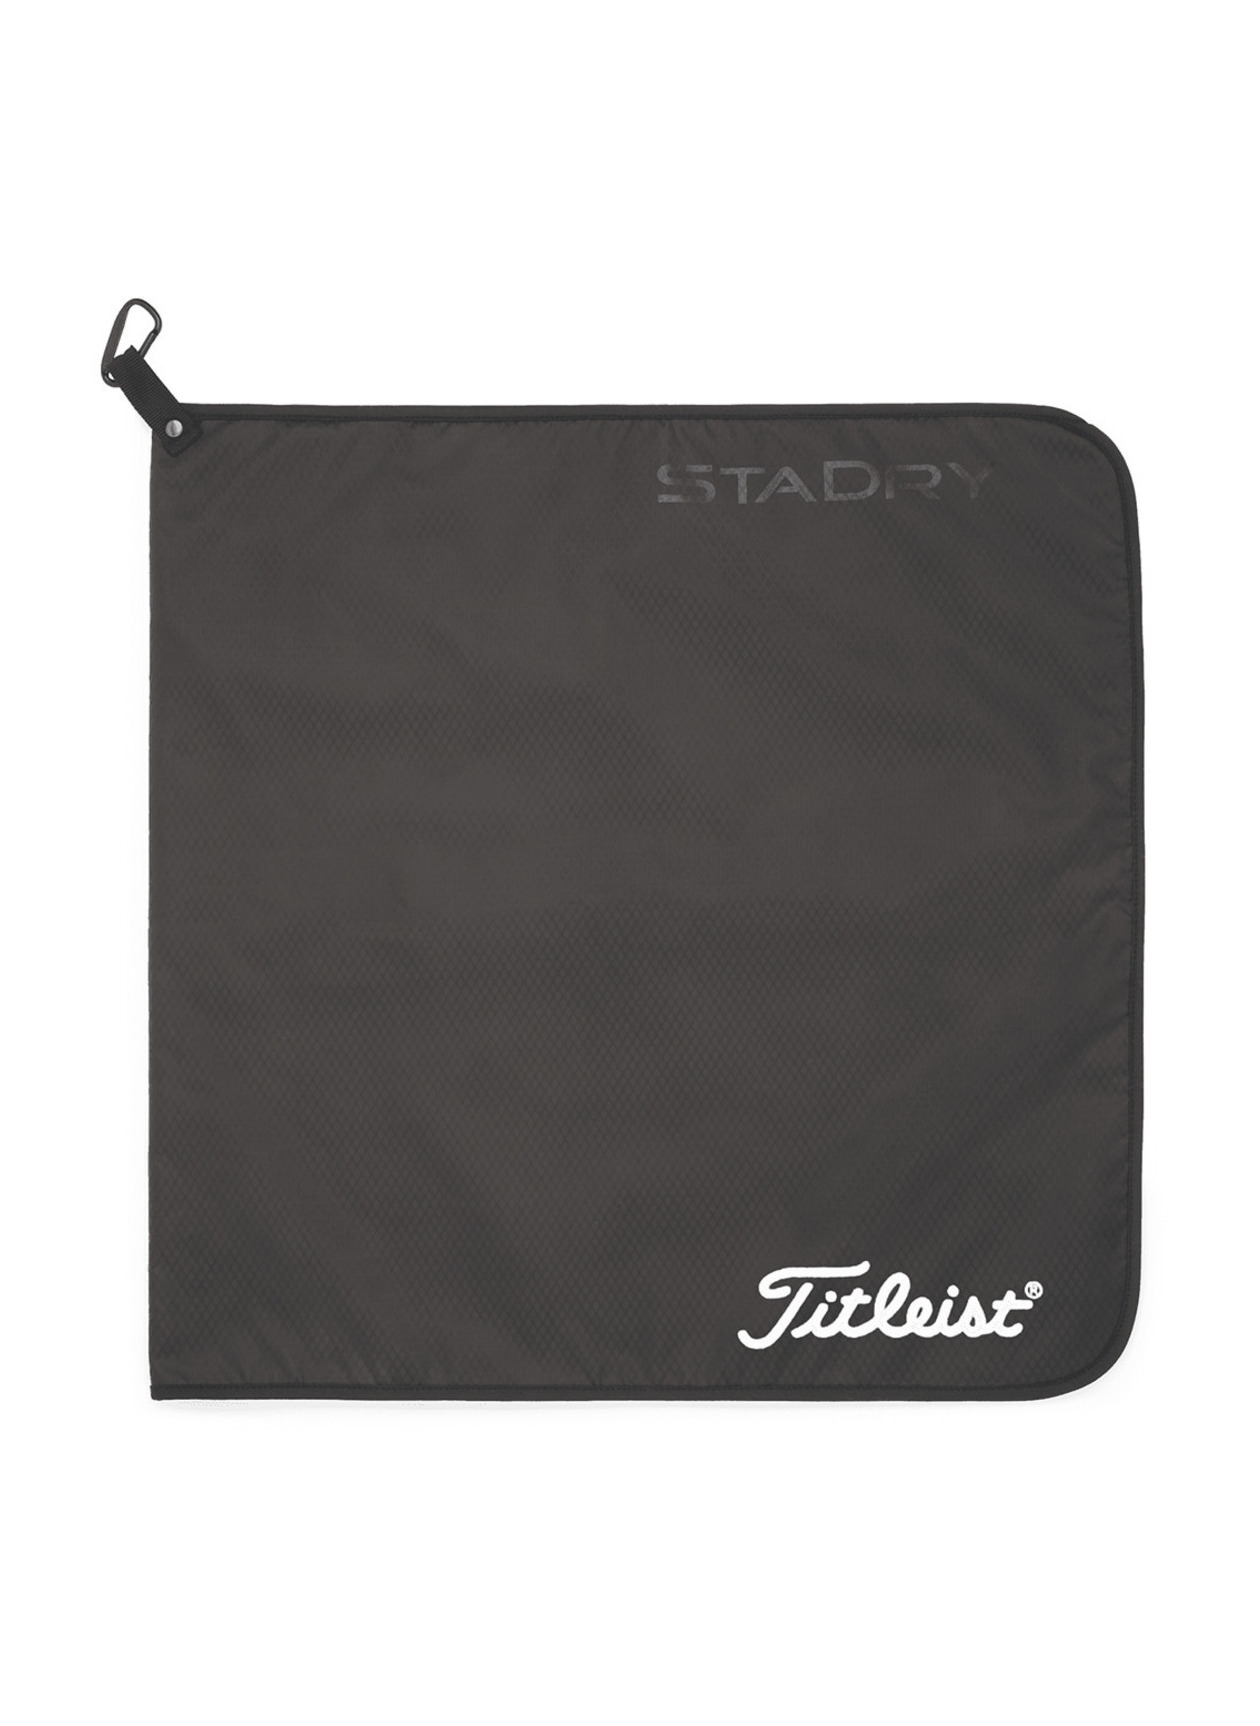 Titleist Black New StaDry Performance Towel